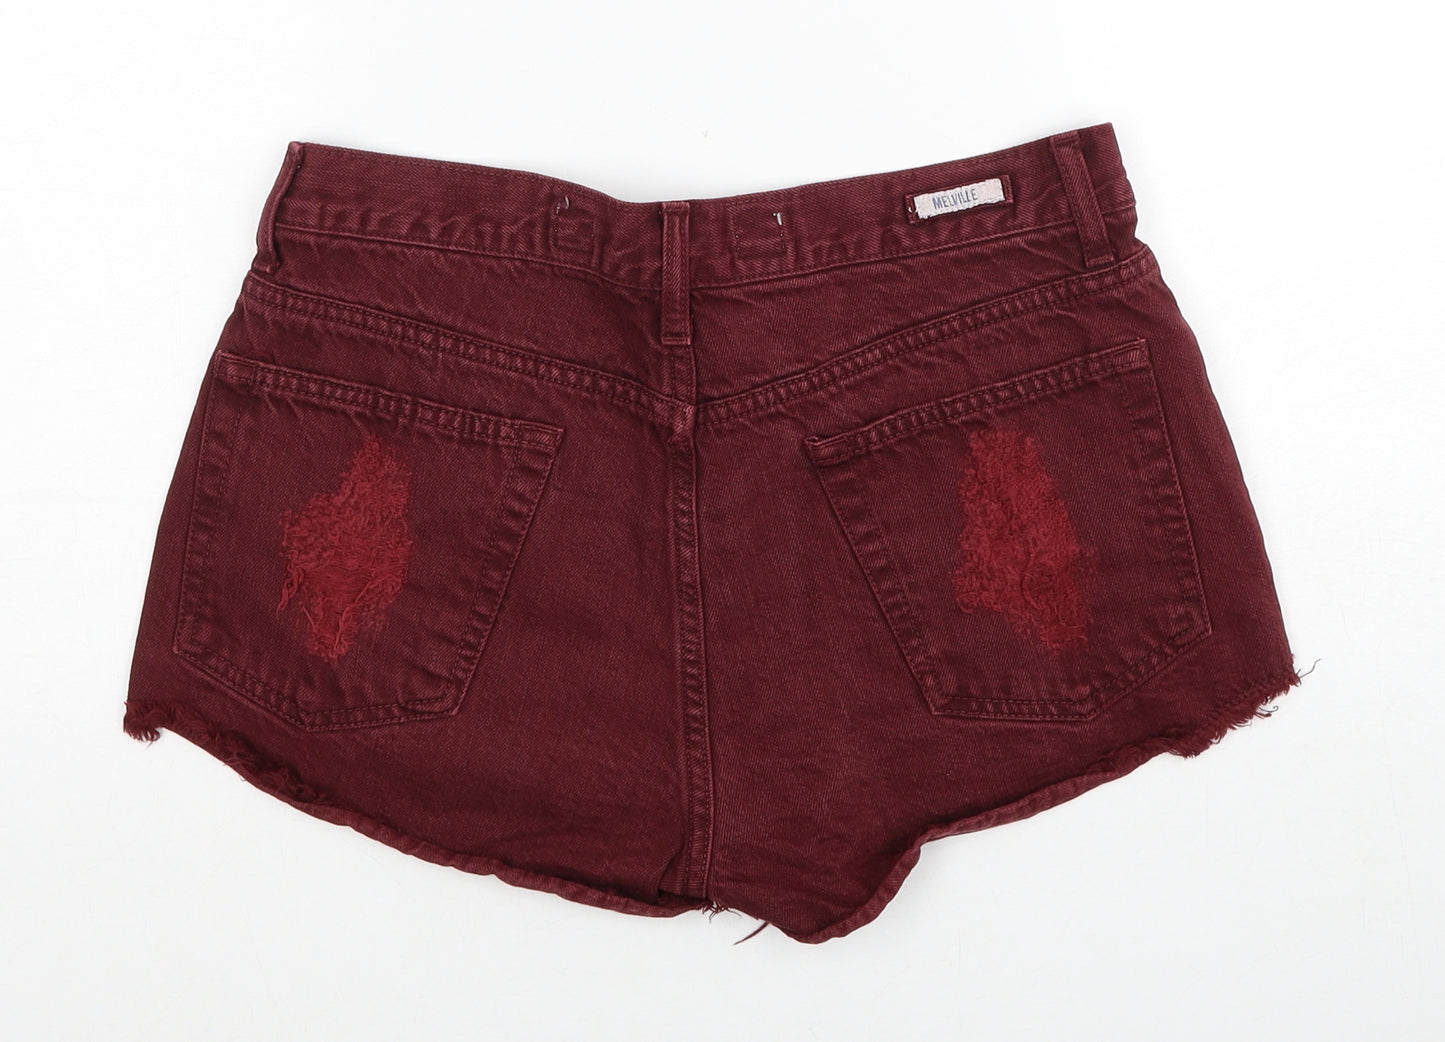 Melville Womens Red Cotton Hot Pants Shorts Size 12 Regular Button